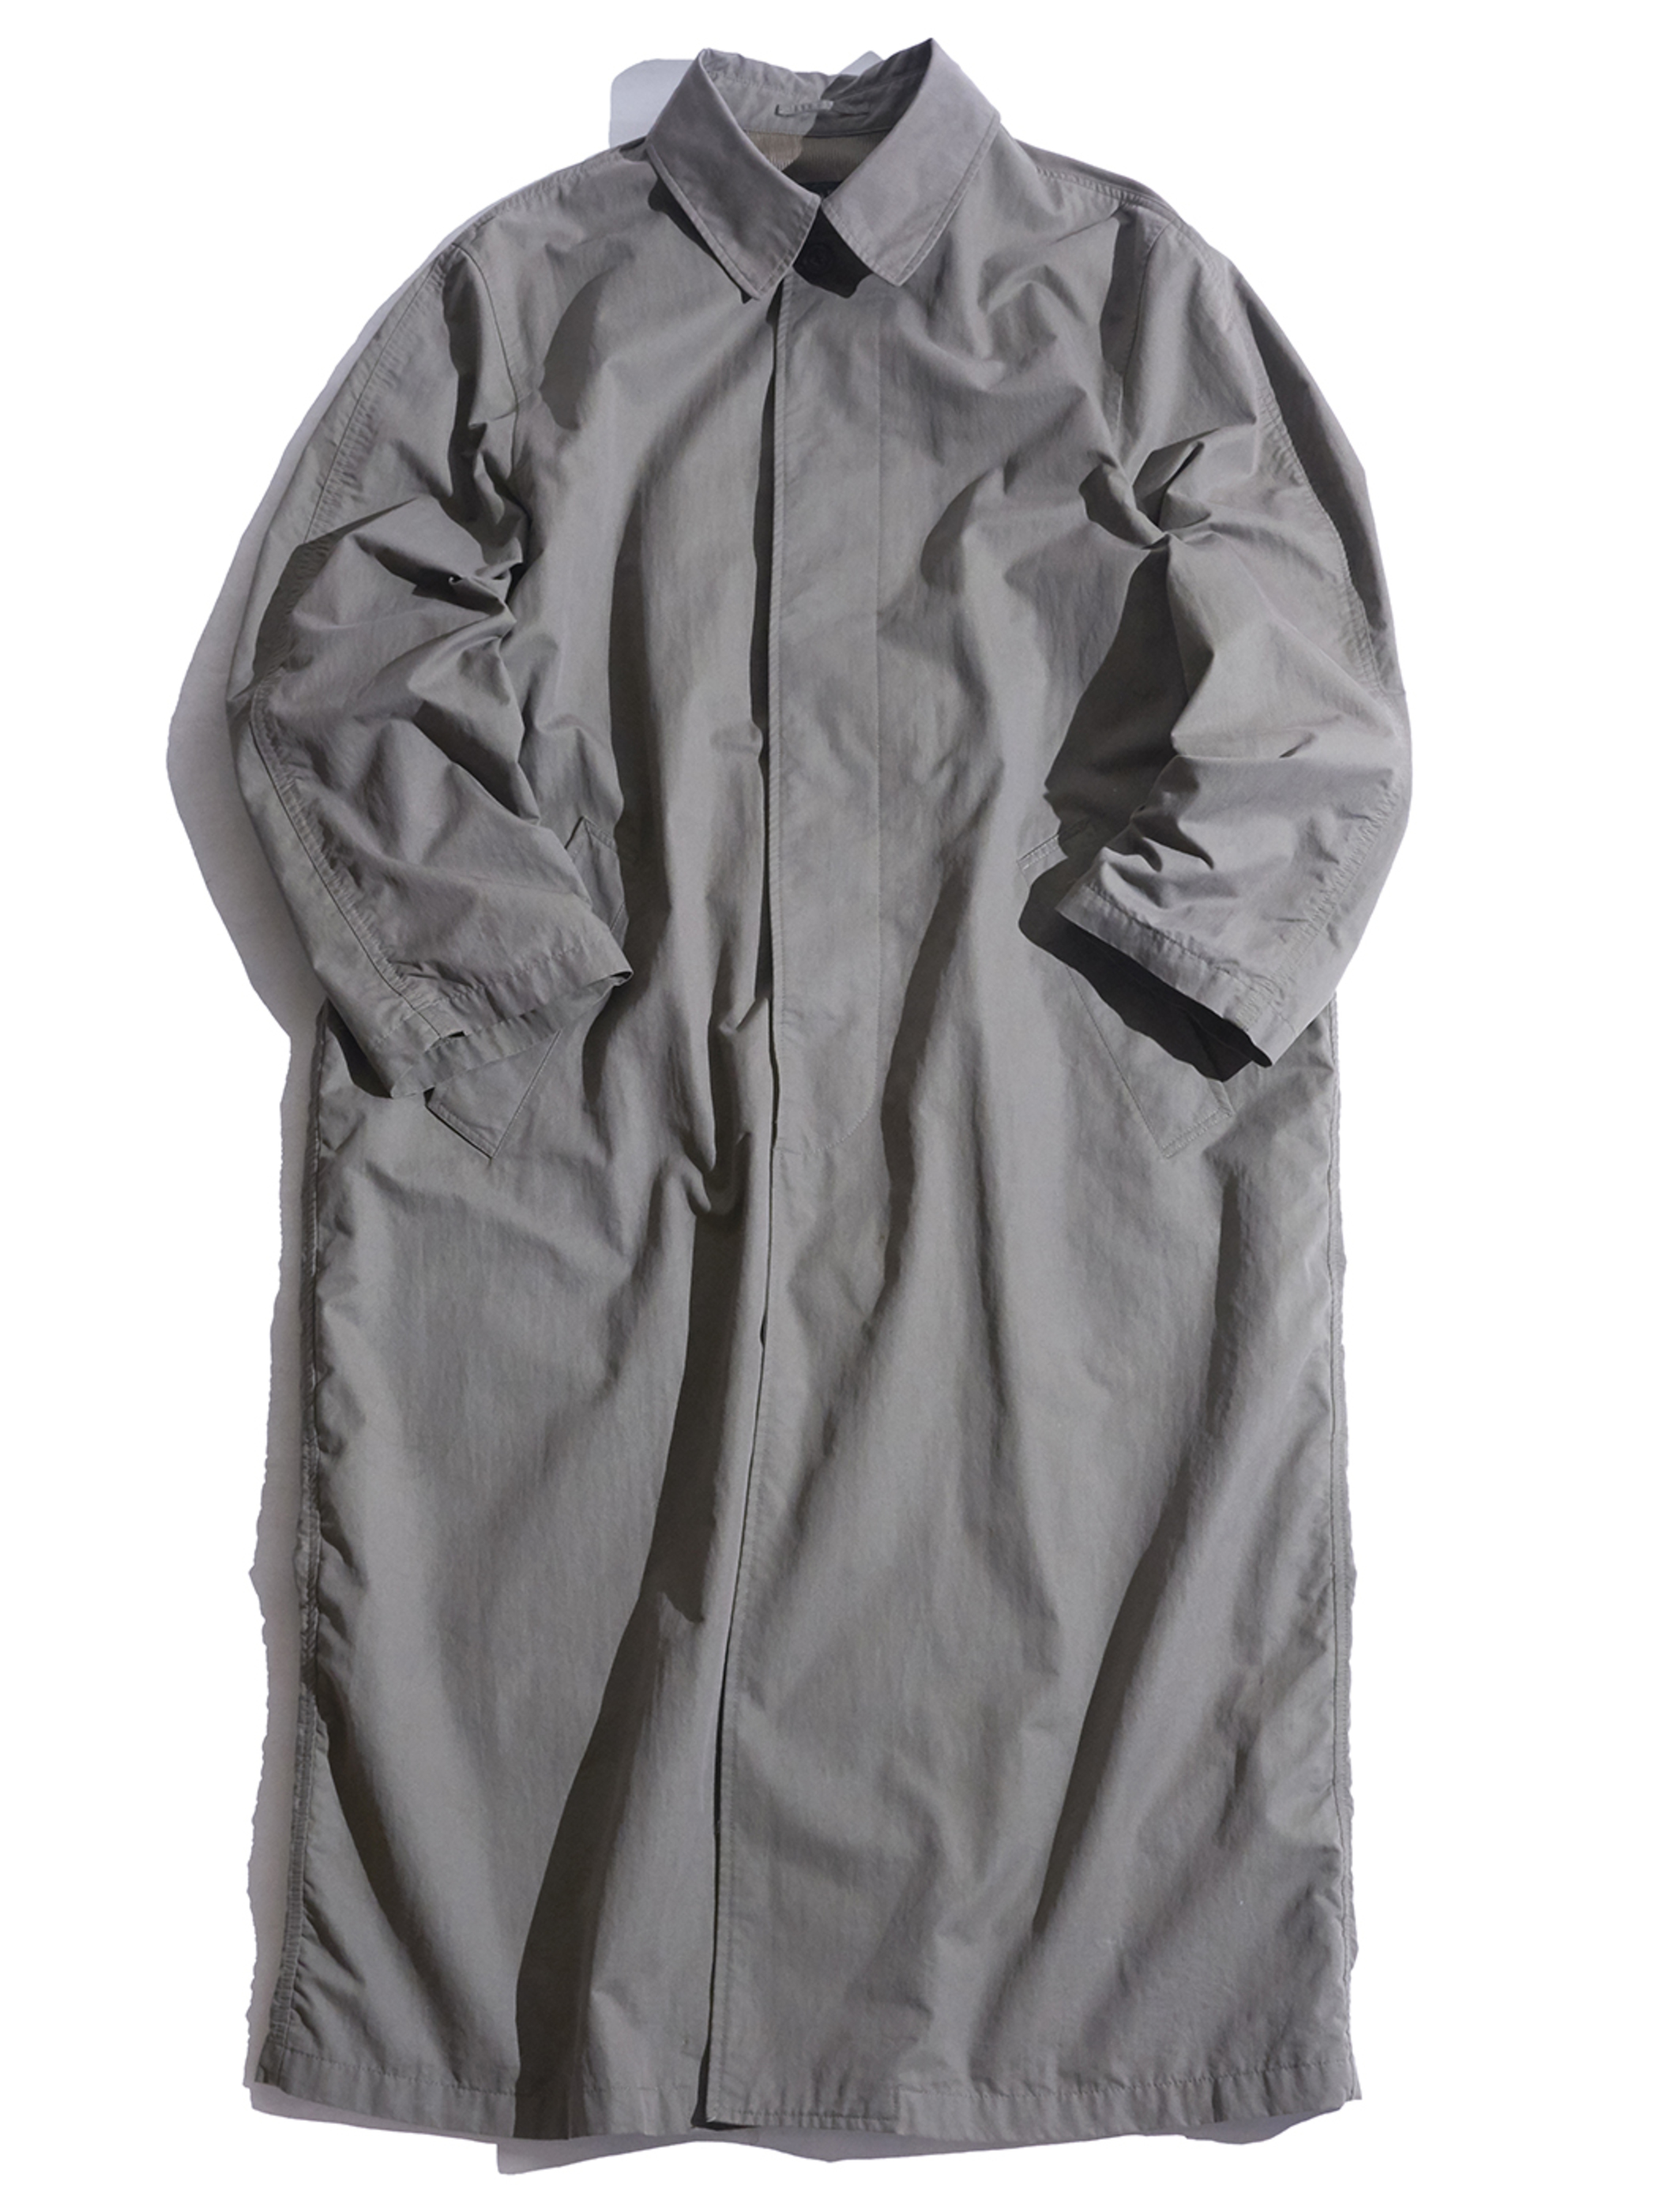 1990s "BANANA REPUBLIC" cotton/nylon bal collar coat -KHAKI-